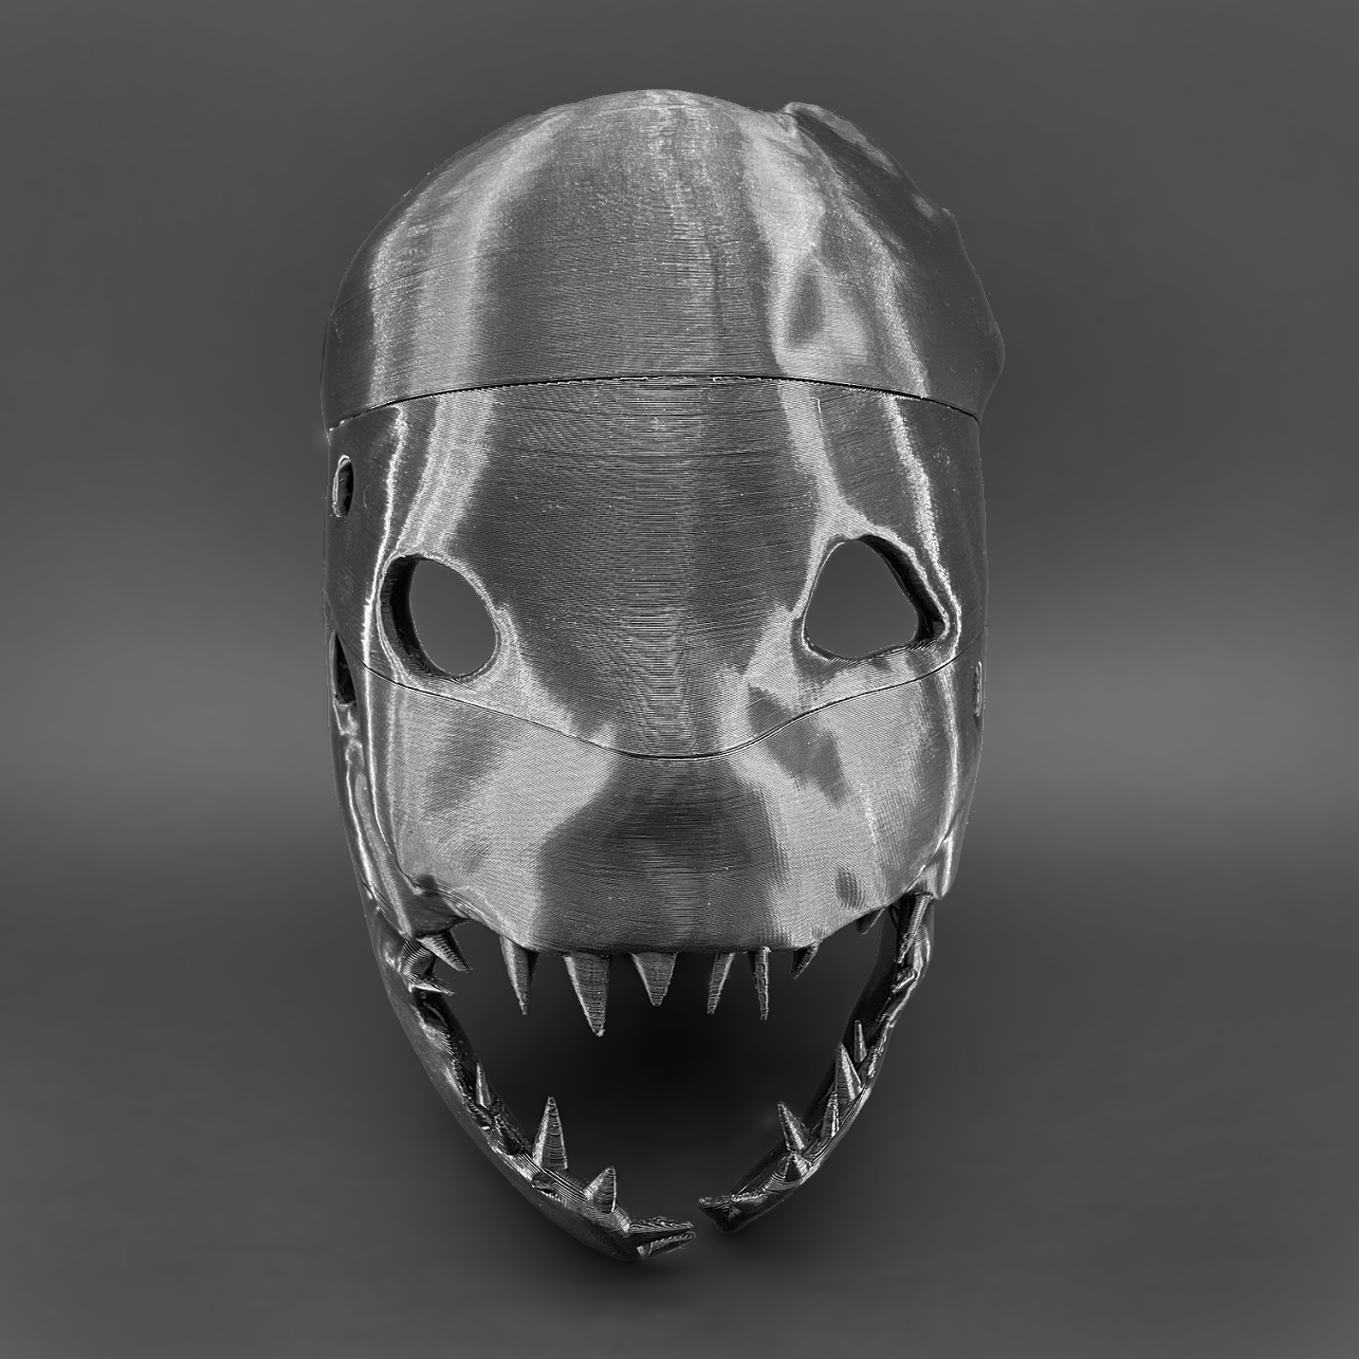 The Trapper's Mask